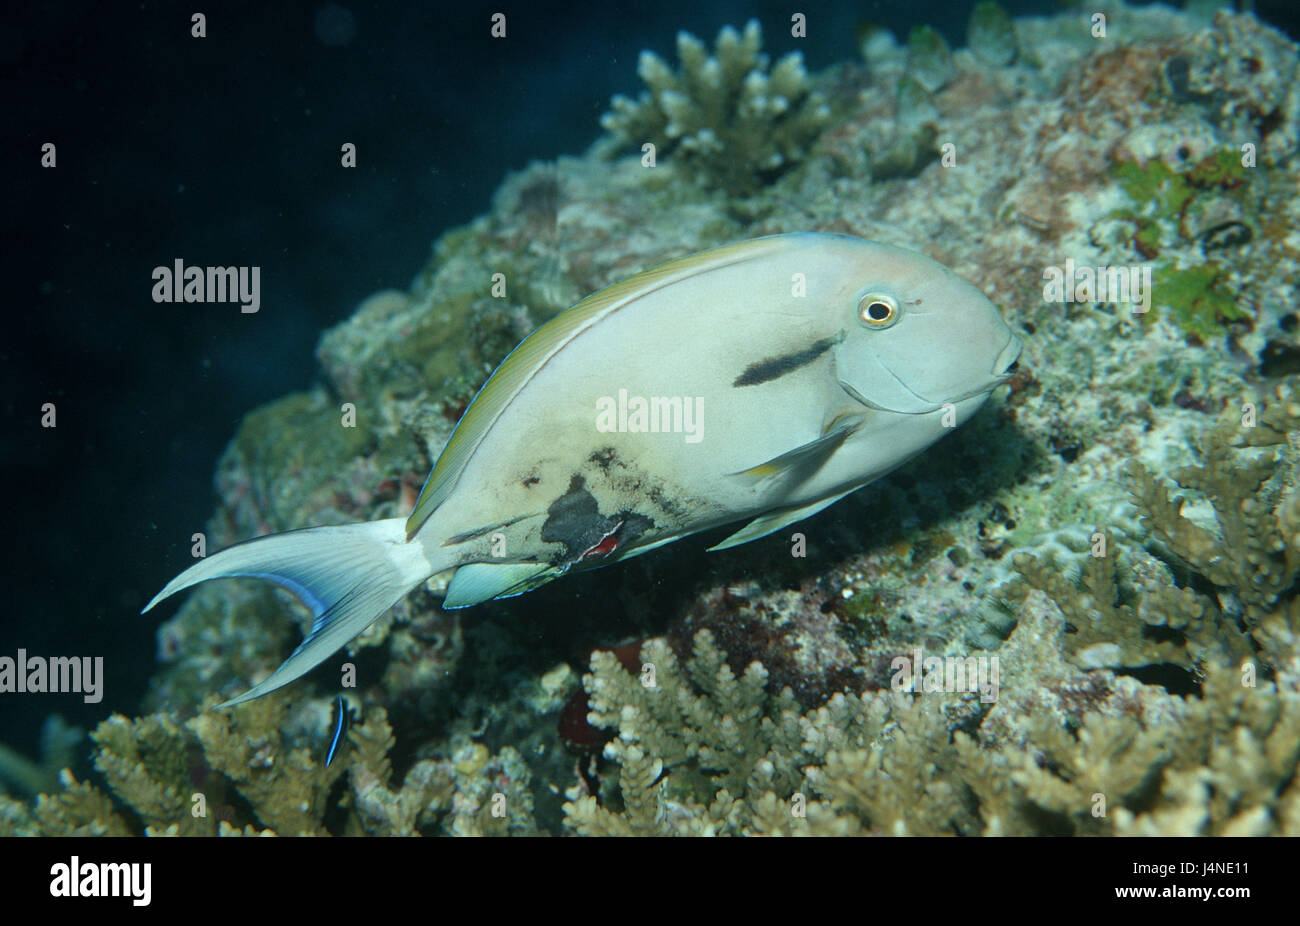 Doctor's fish, Acanthurus spec., injury, Stock Photo